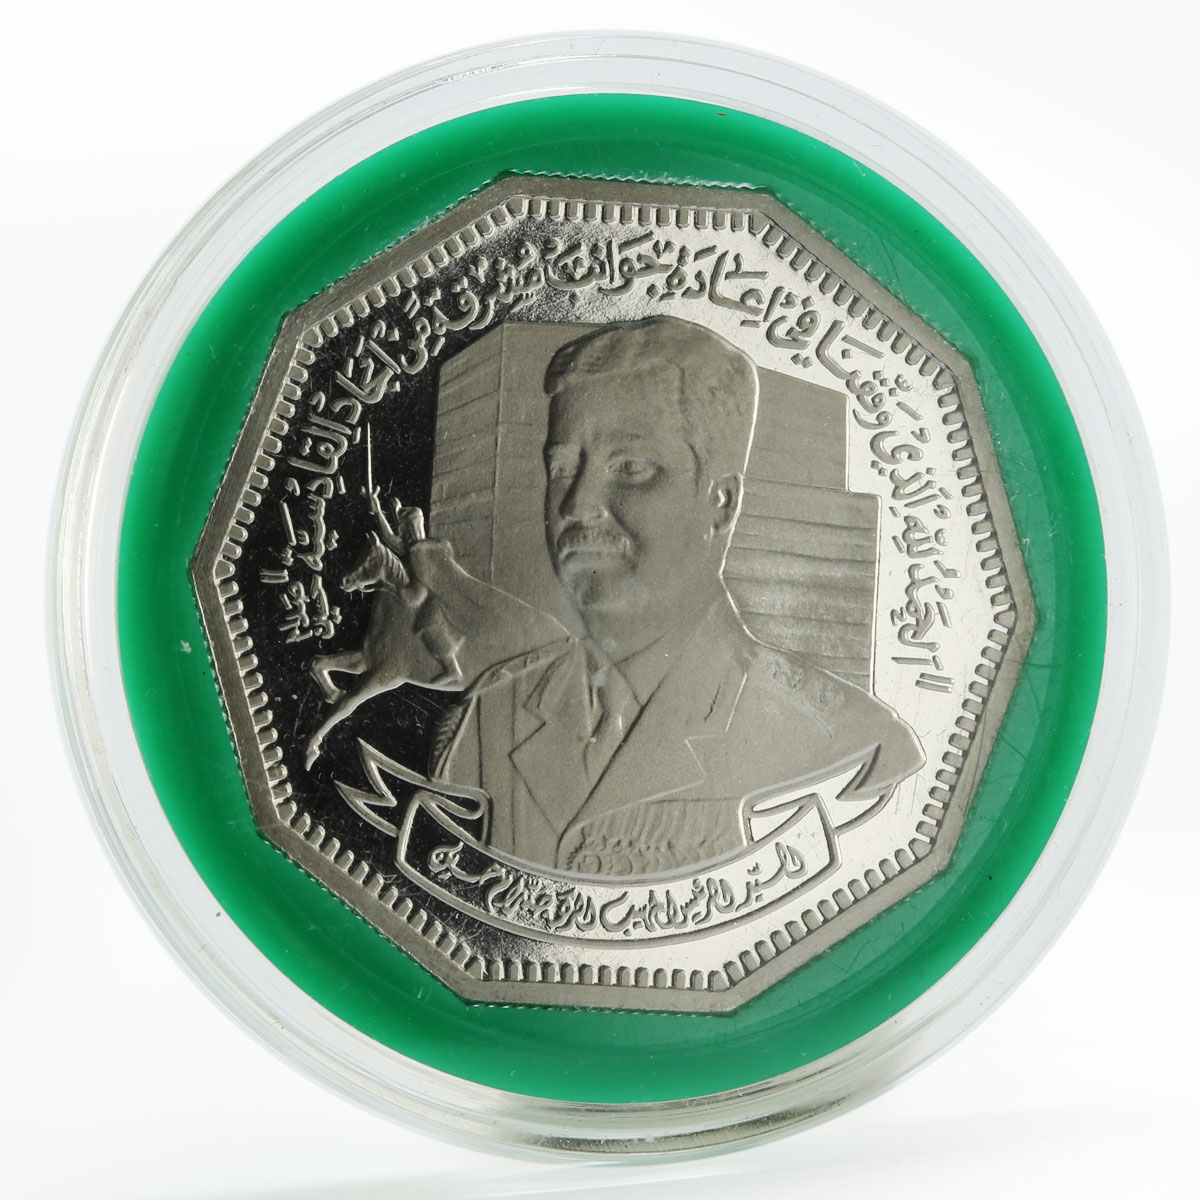 Iraq 1 dinar Battle of ai-Qadisiyyah proof nickel coin 1980